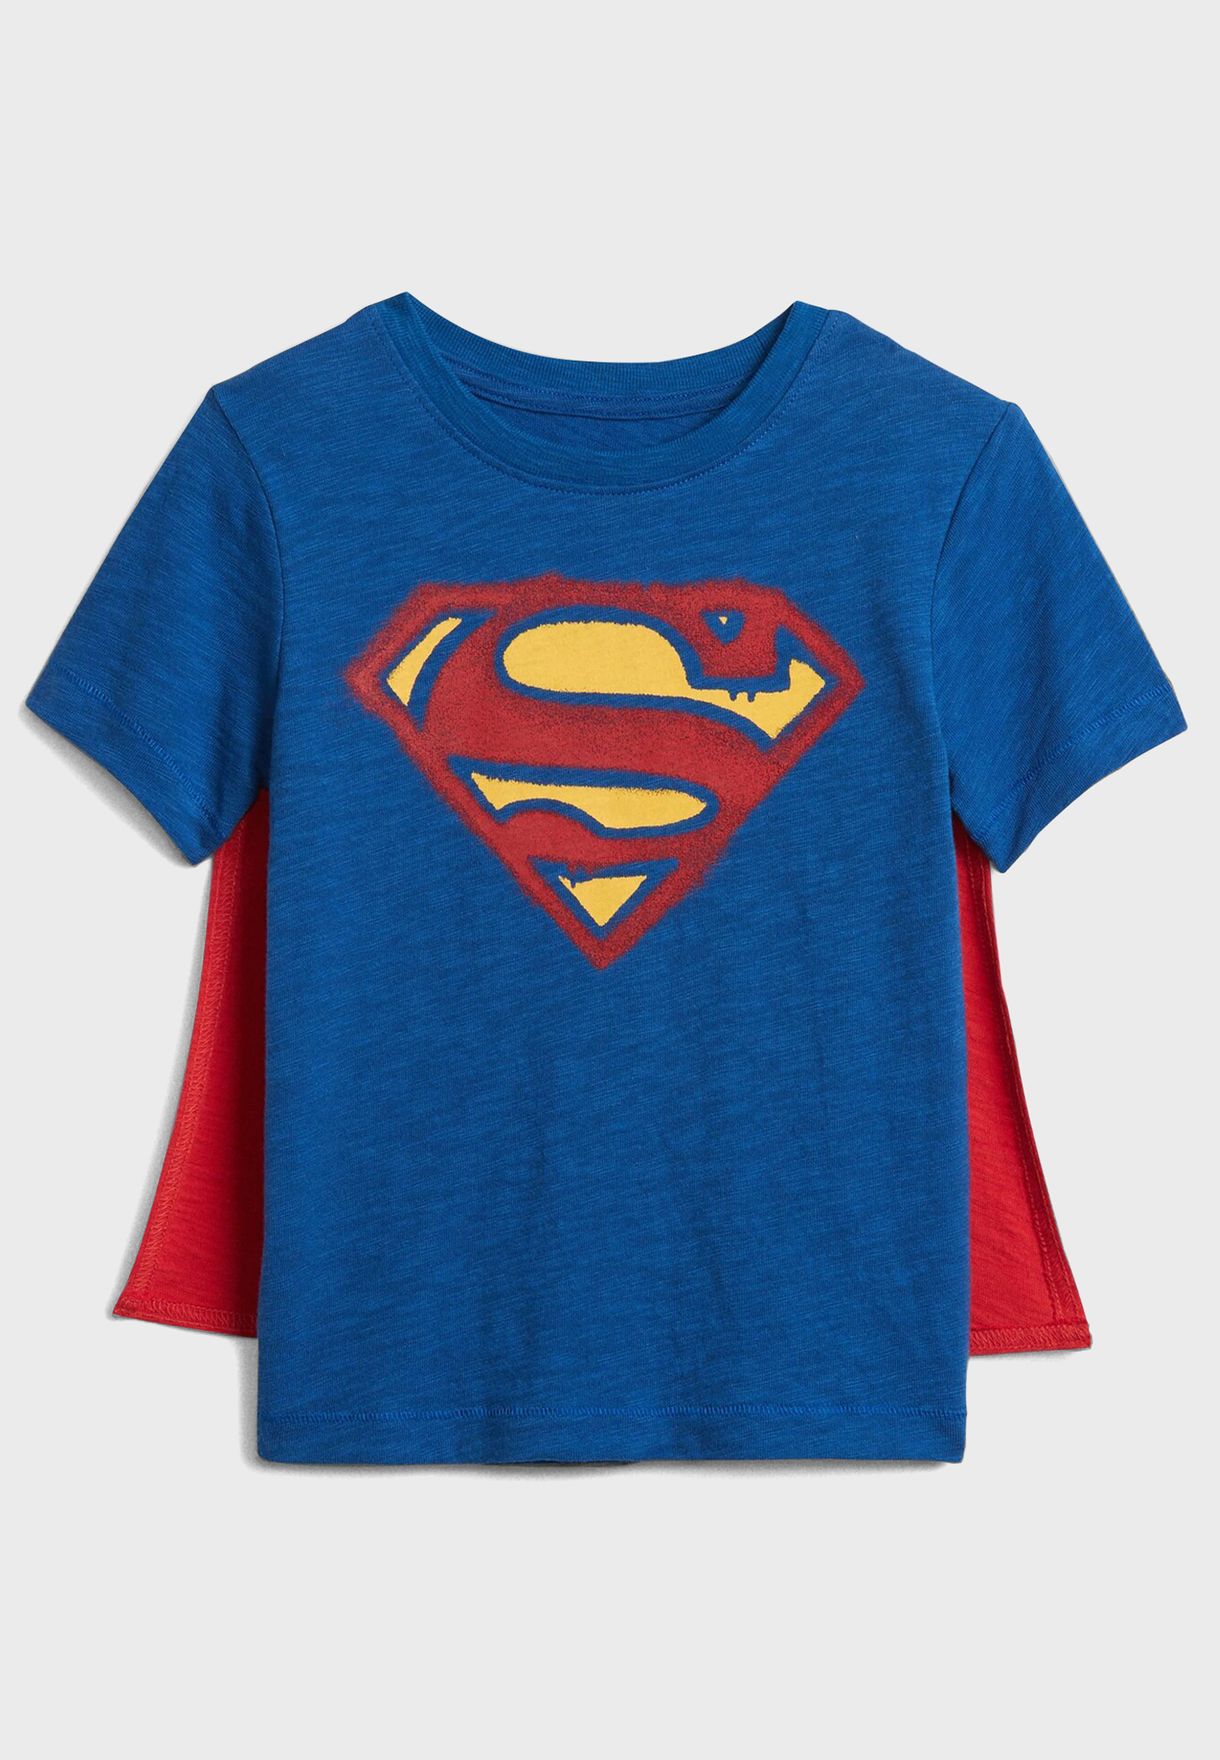 superman t shirt boy